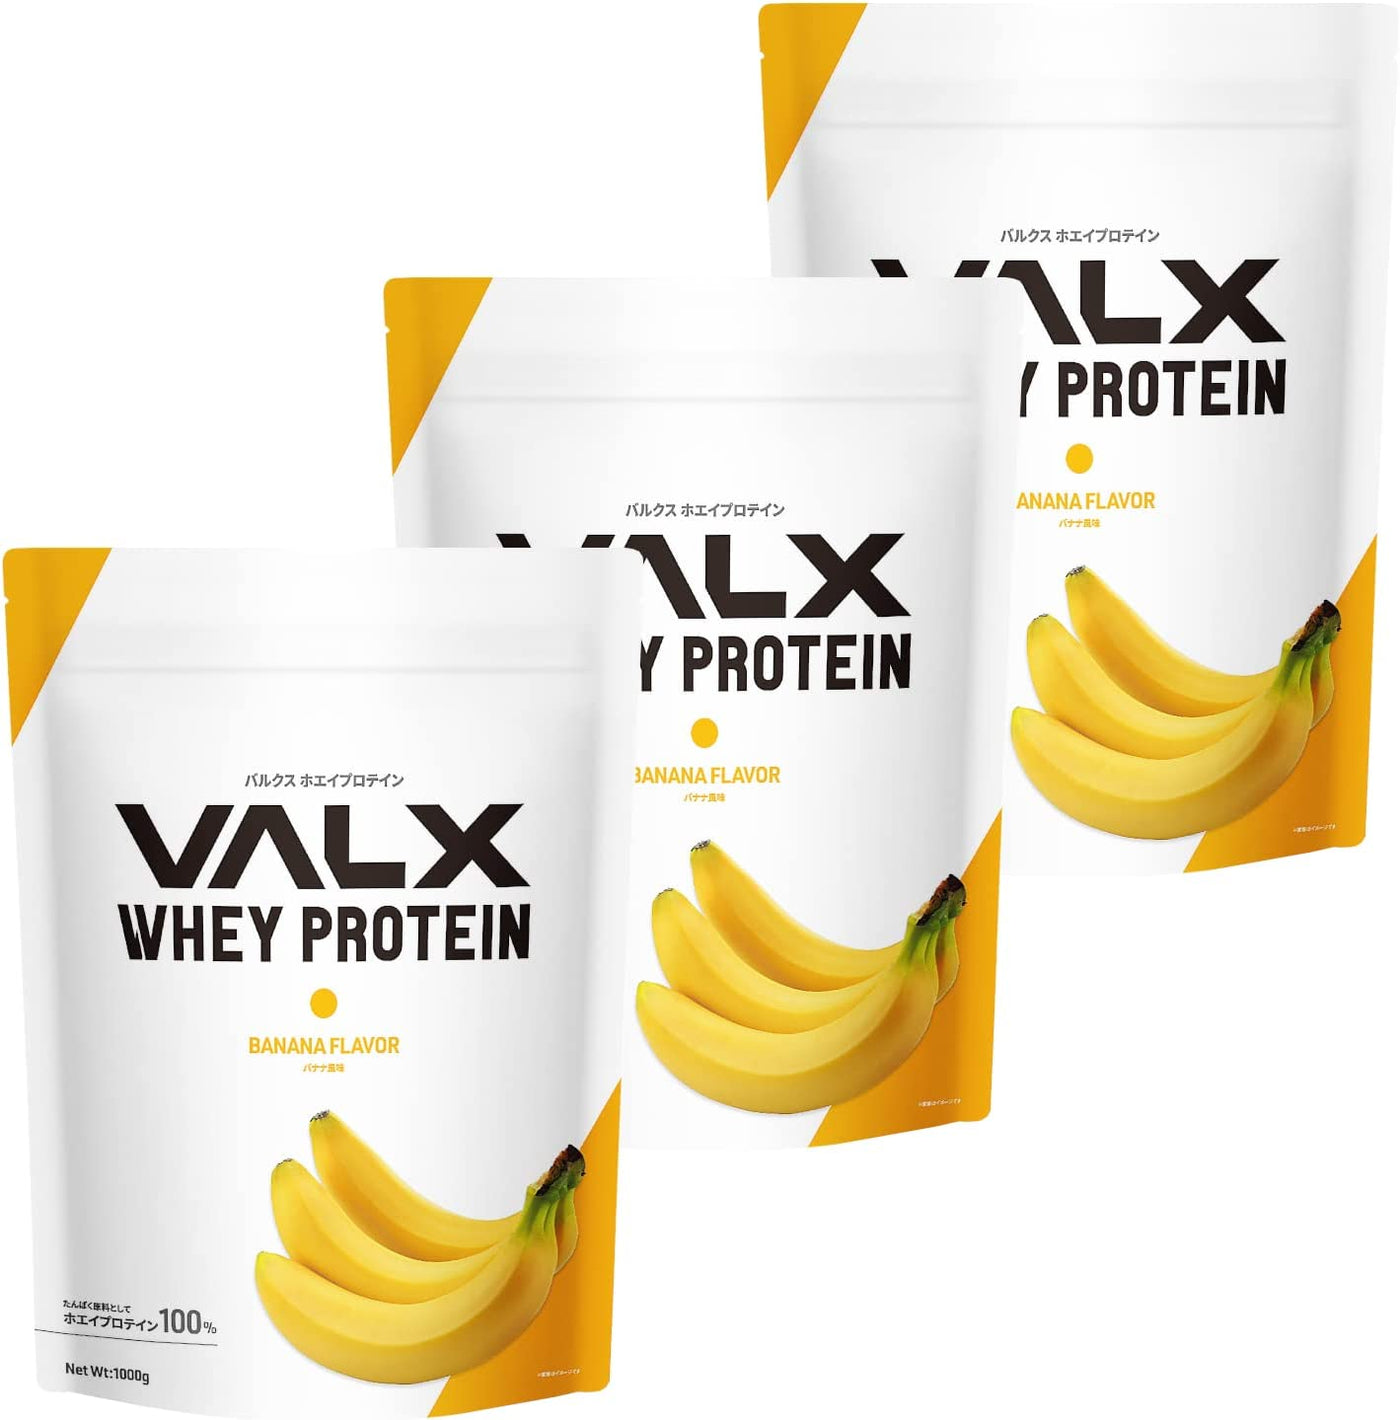 VALX Bulk Whey Protein Banana Flavor Protein Whey Protein Produced